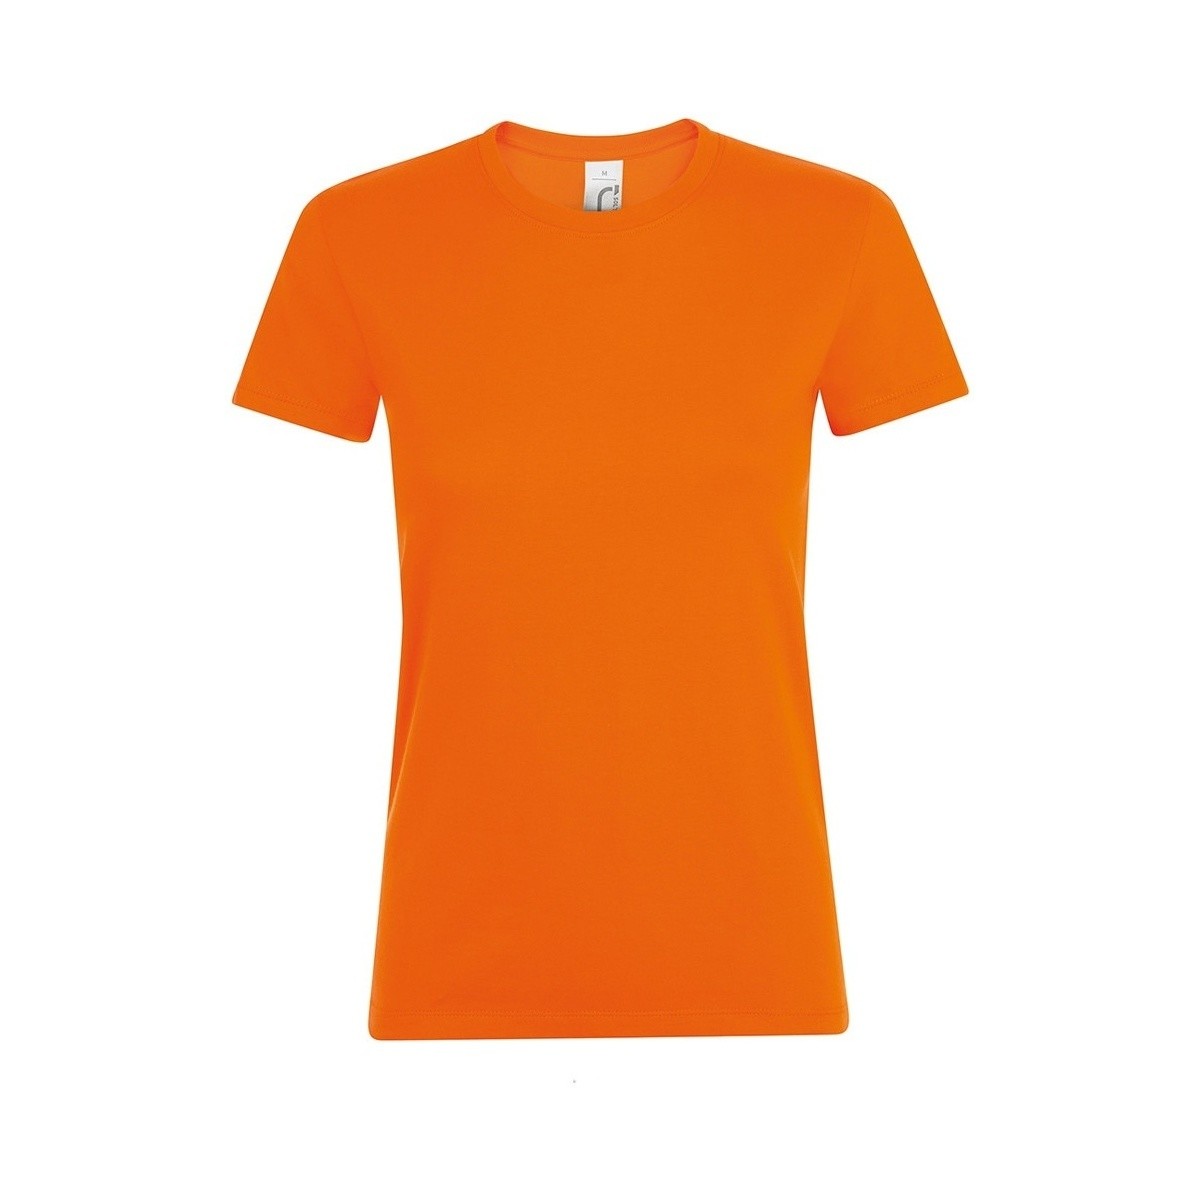 Vêtements Femme T-shirt Masculina Impressa S1434 V-22a Vermelho 01825 Orange